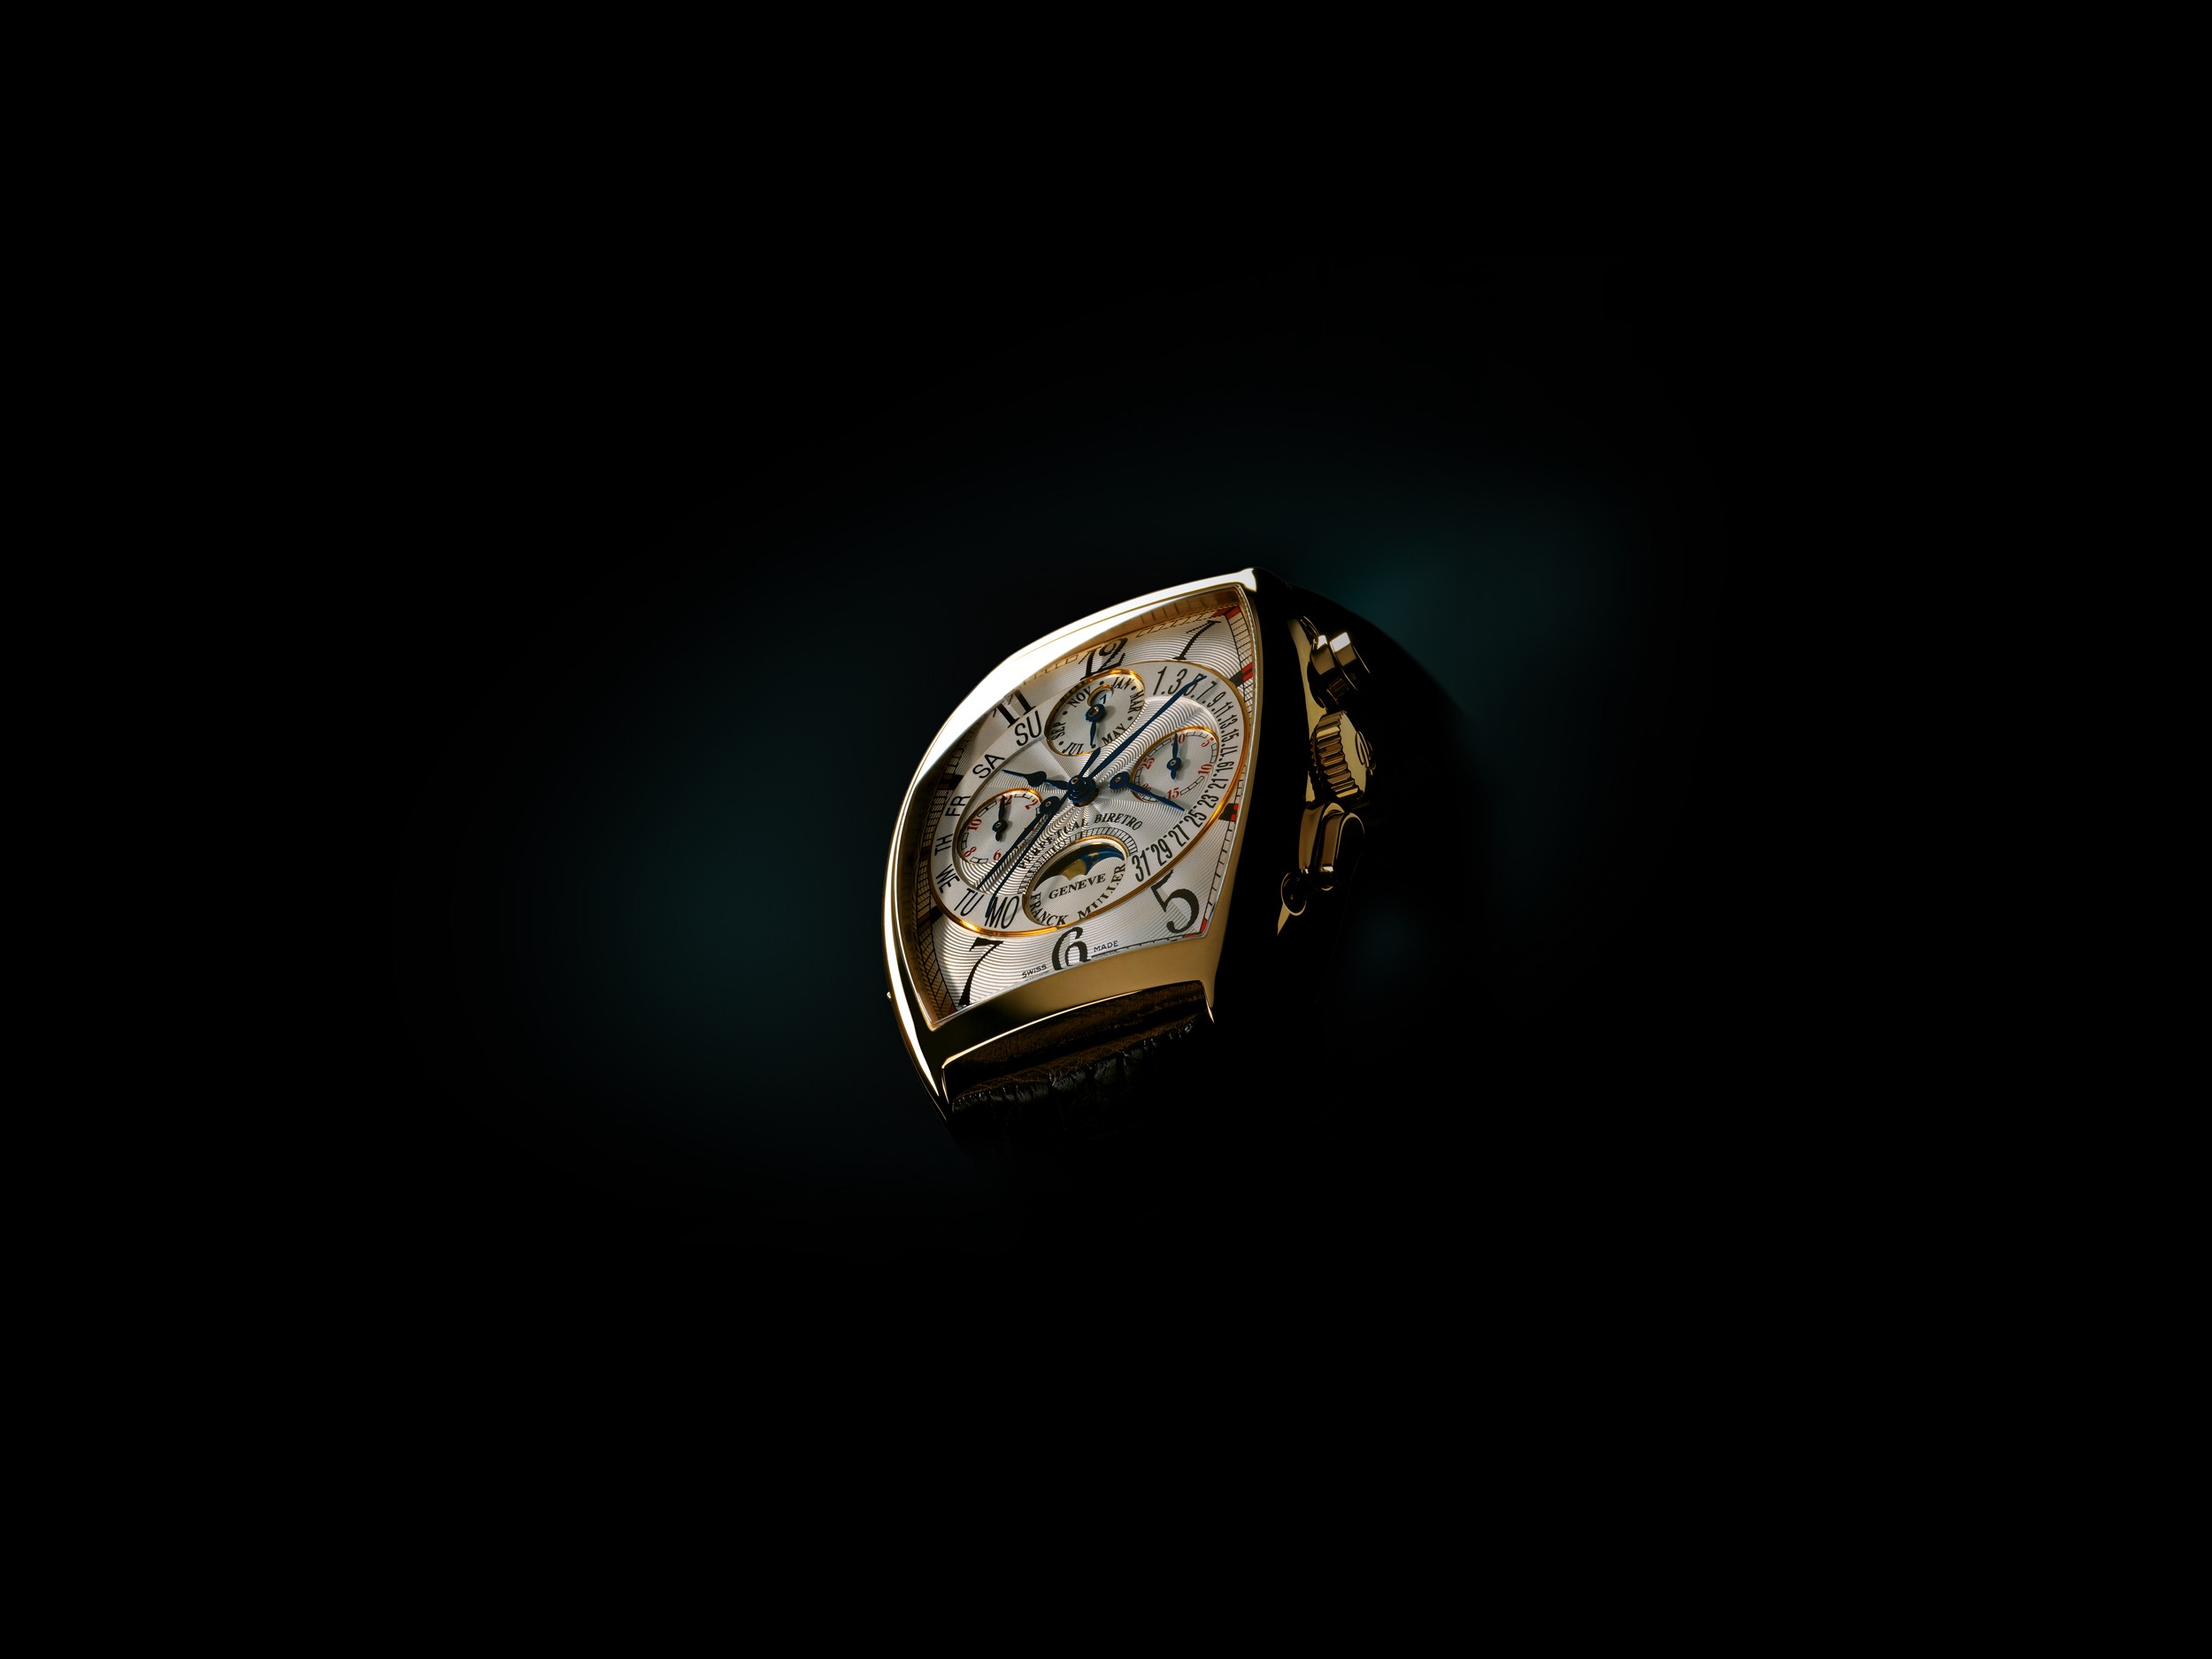 Franck Muller conquistador 10000cc king 45 mm automatique watch